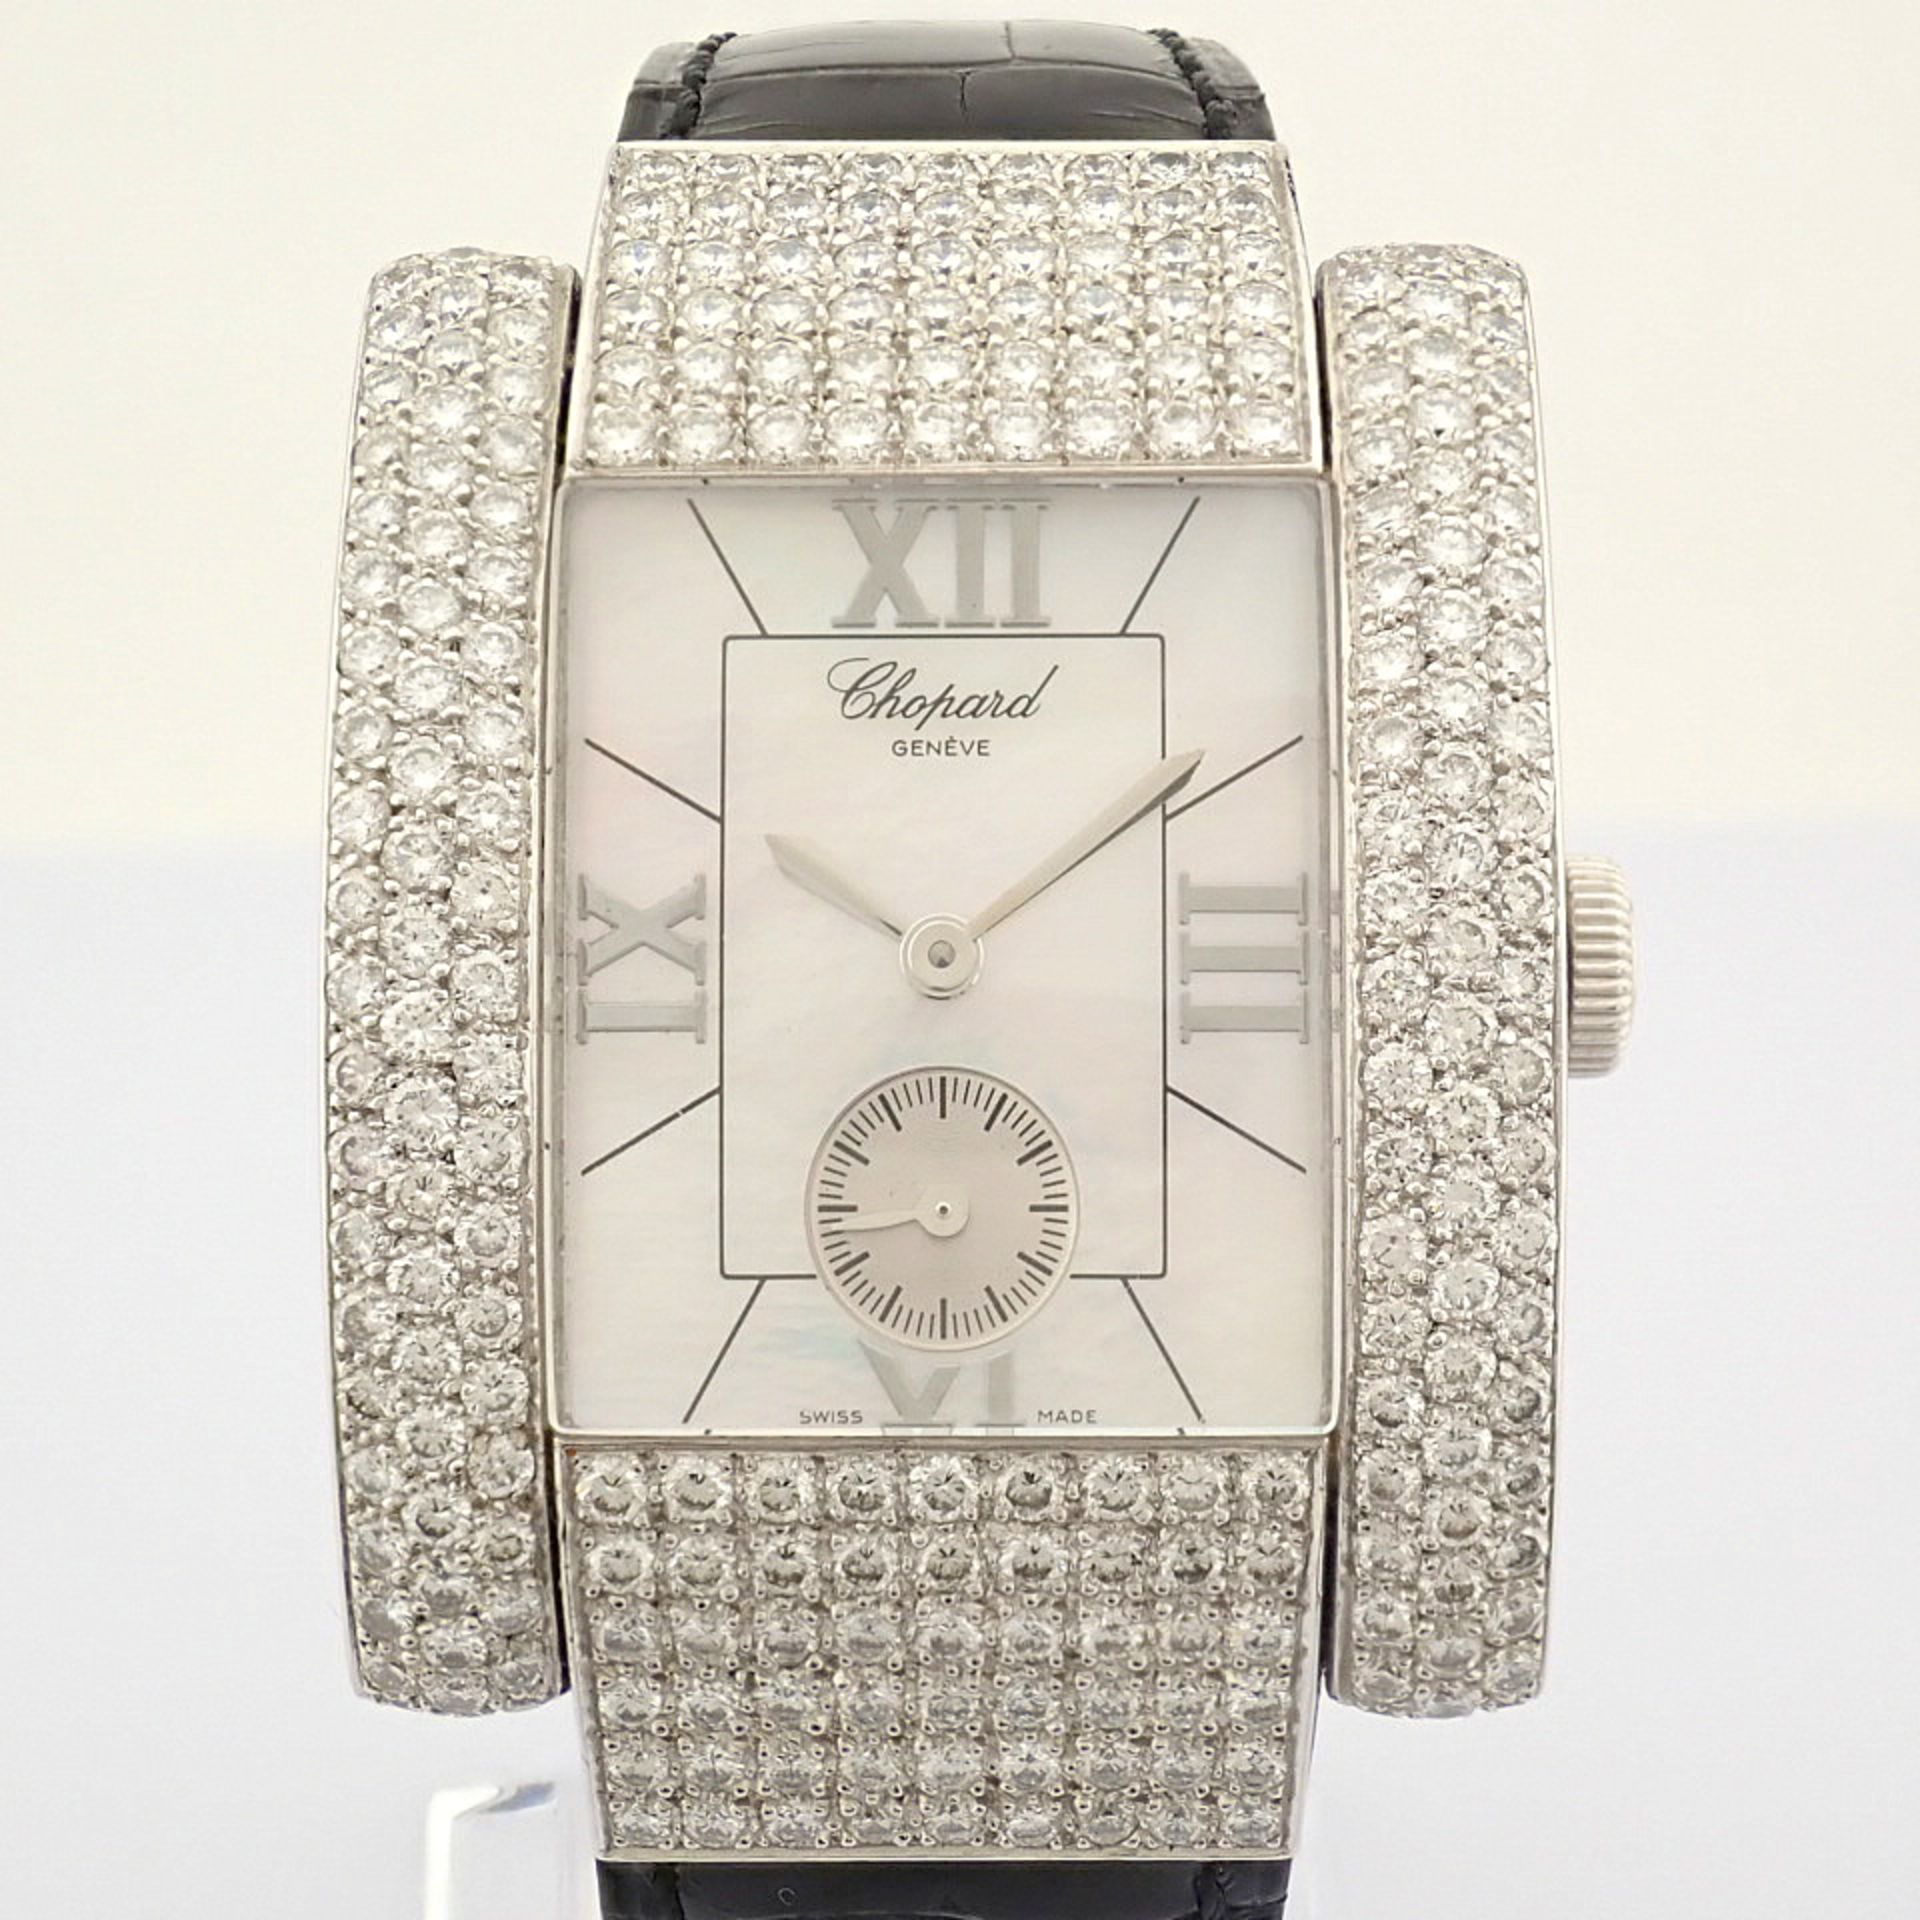 Chopard / La Strada - Lady's 18K White Gold Wrist Watch - Image 5 of 13